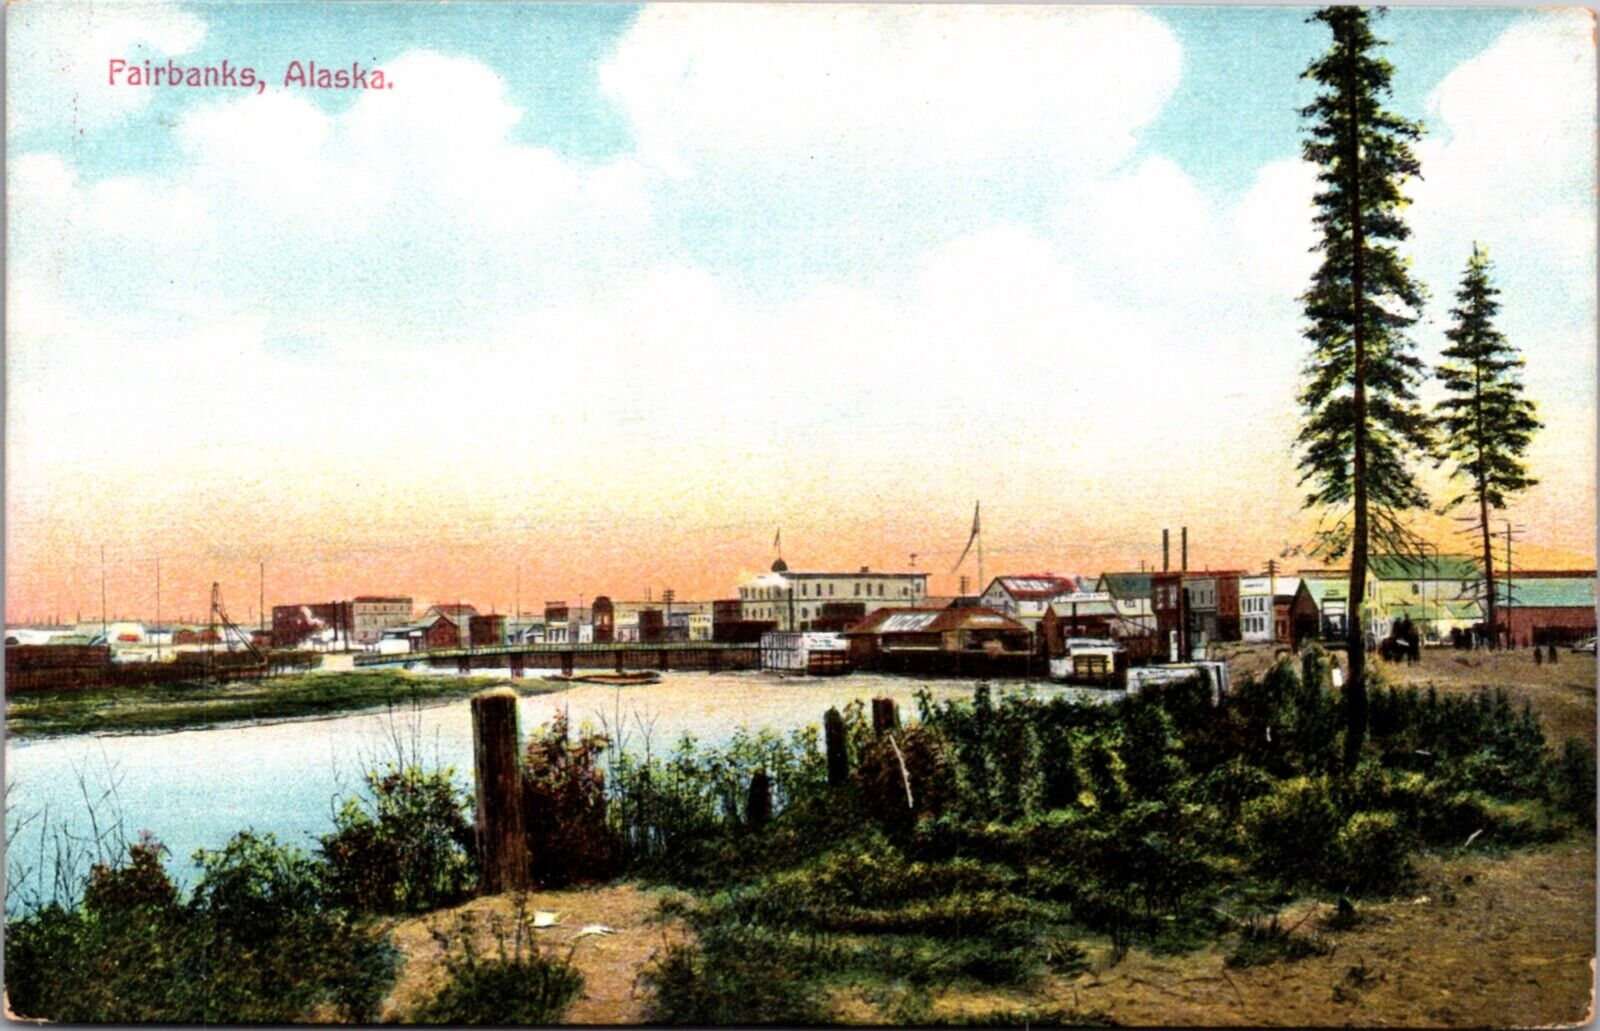 Postcard Overview of Fairbanks, Alaska